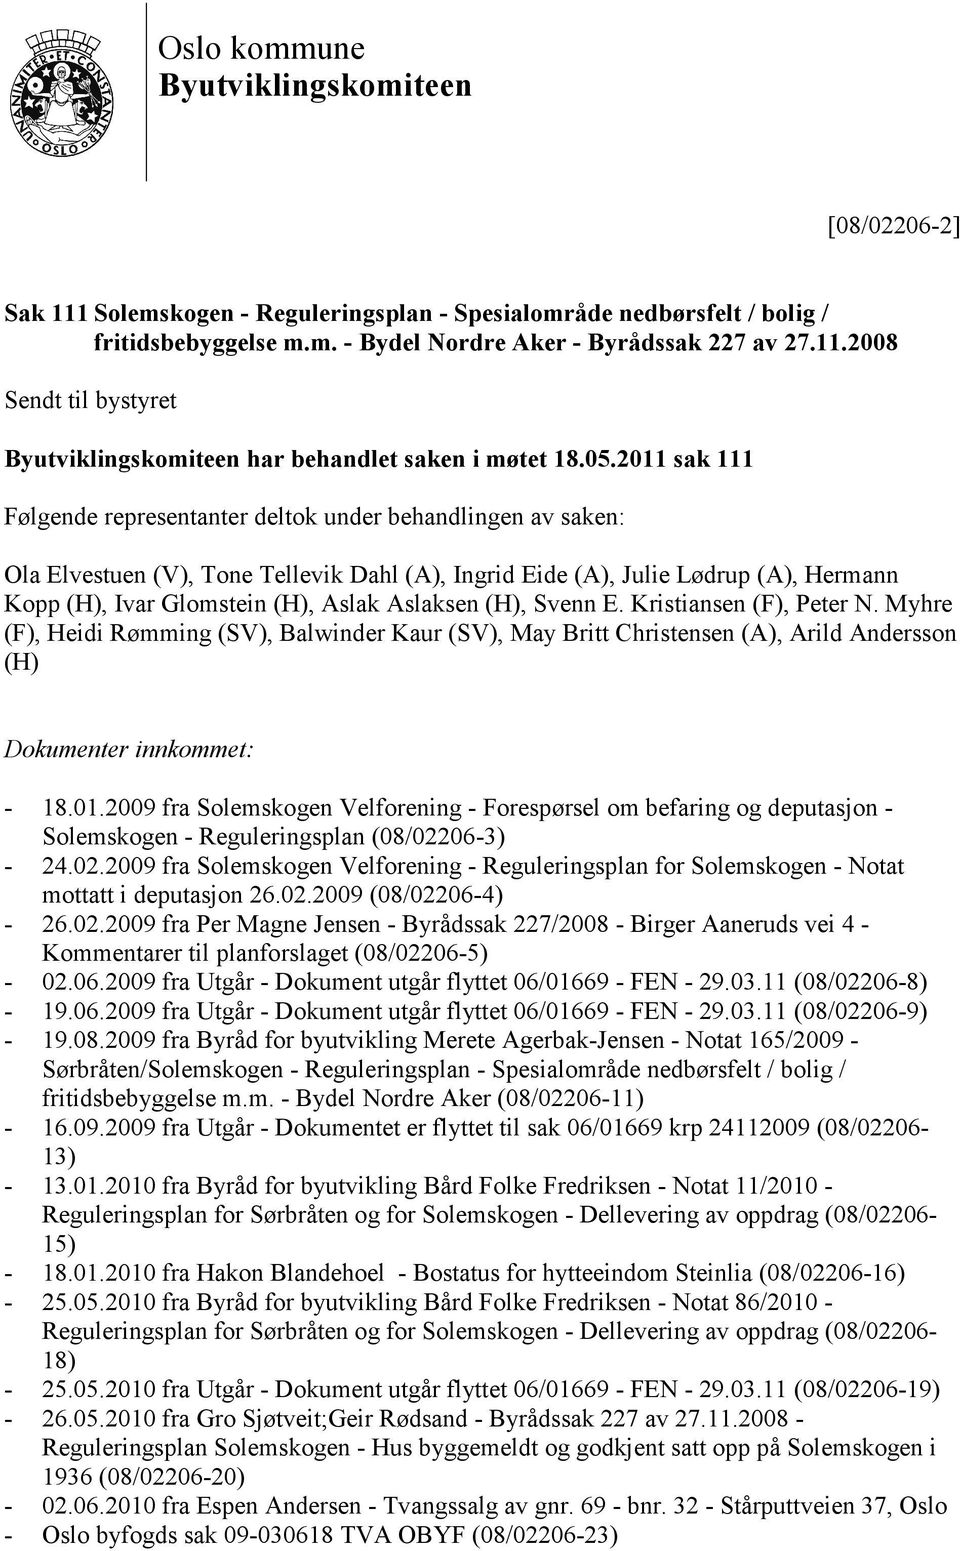 Aslaksen (H), Svenn E. Kristiansen (F), Peter N. Myhre (F), Heidi Rømming (SV), Balwinder Kaur (SV), May Britt Christensen (A), Arild Andersson (H) Dokumenter innkommet: - 18.01.